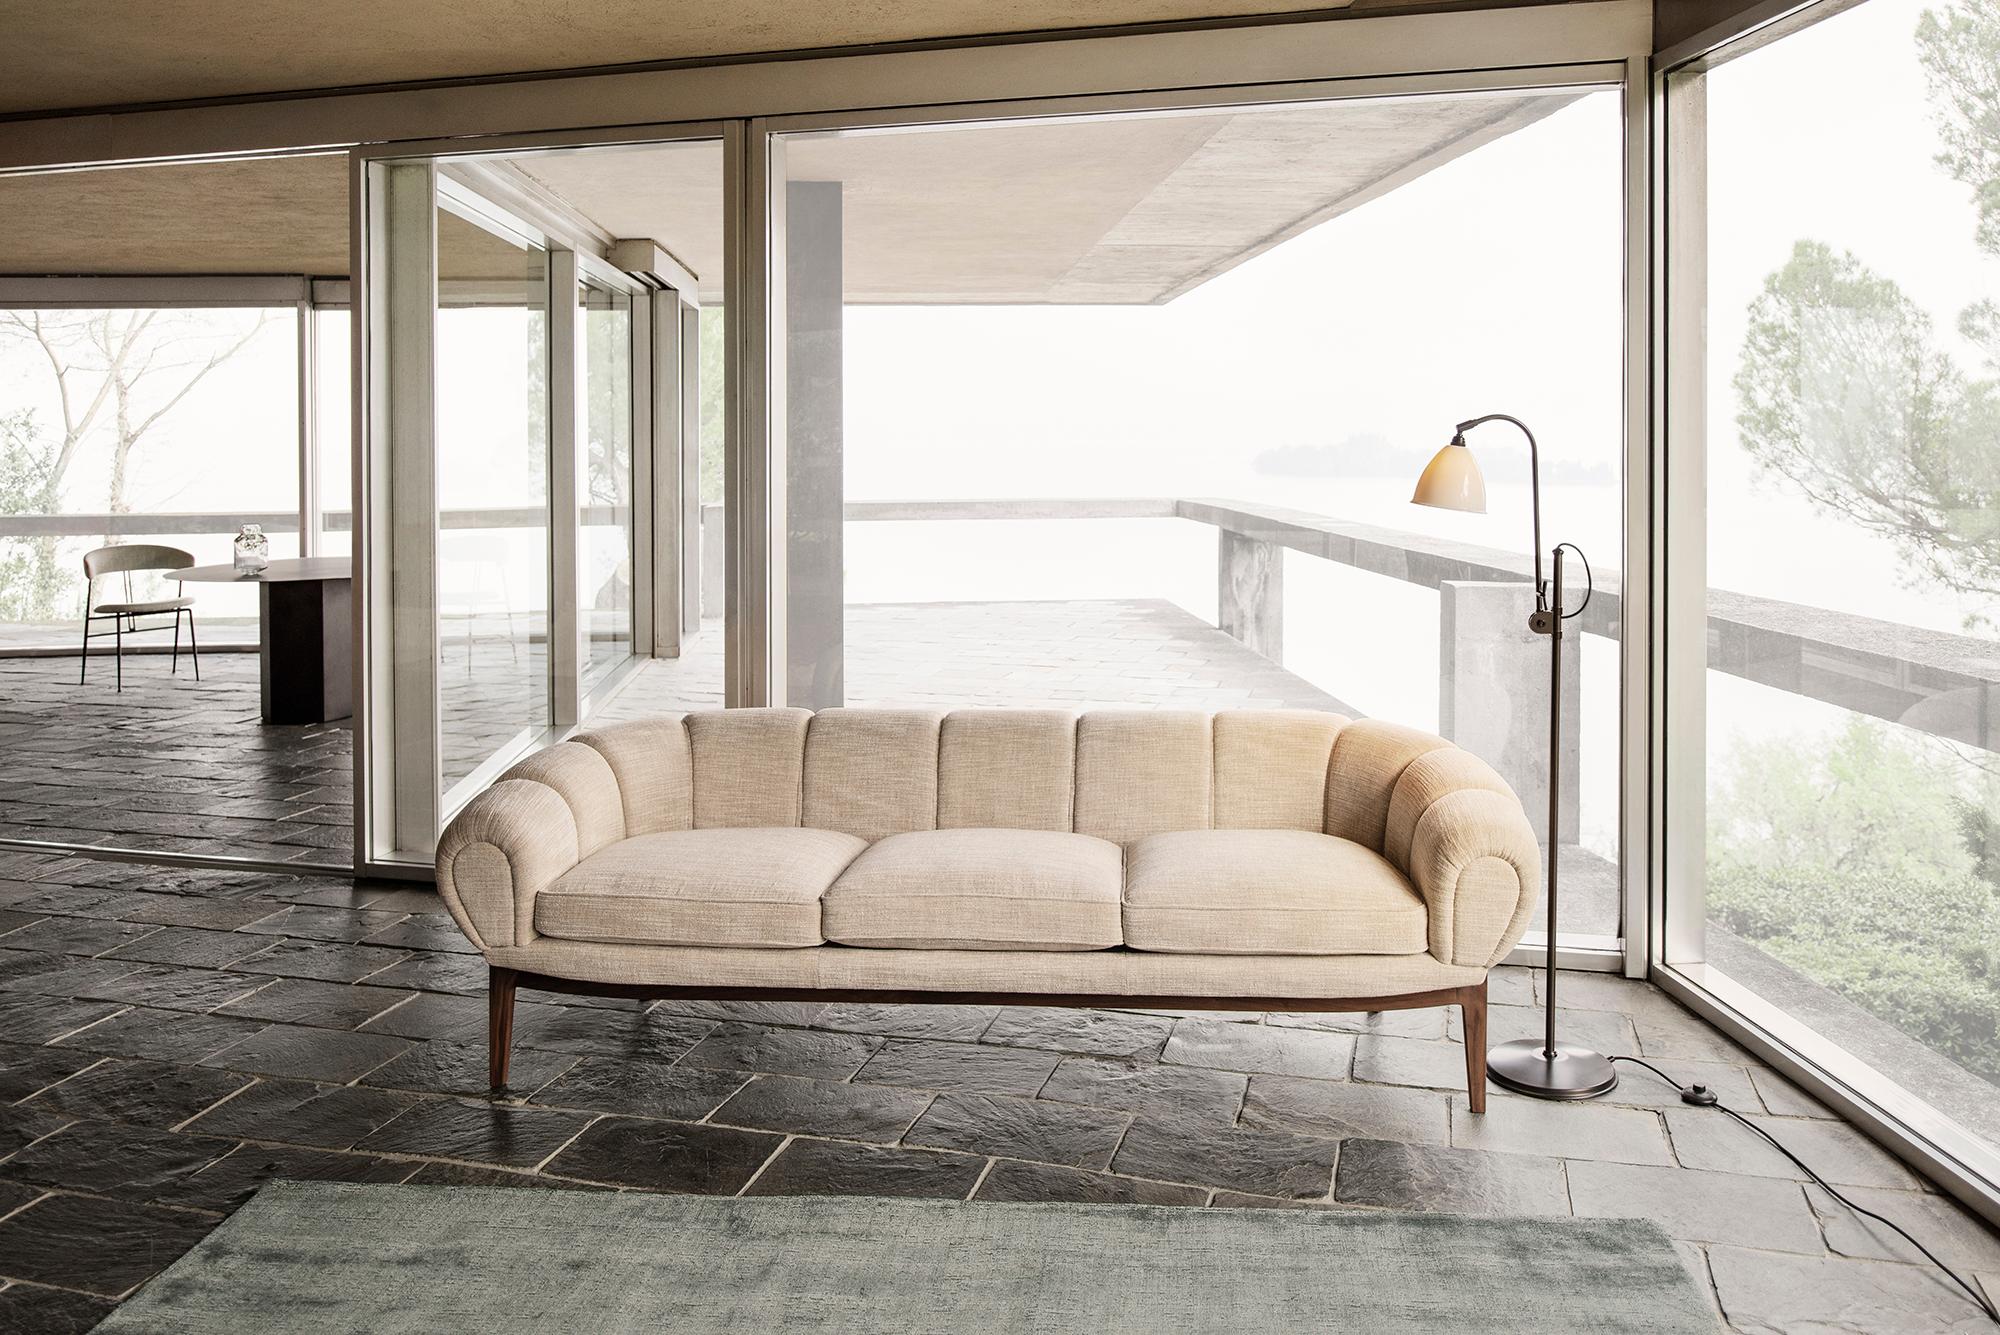 Steel Fabric 'Croissant' Sofa by Illum Wikkelsø for GUBI with Oak Legs For Sale